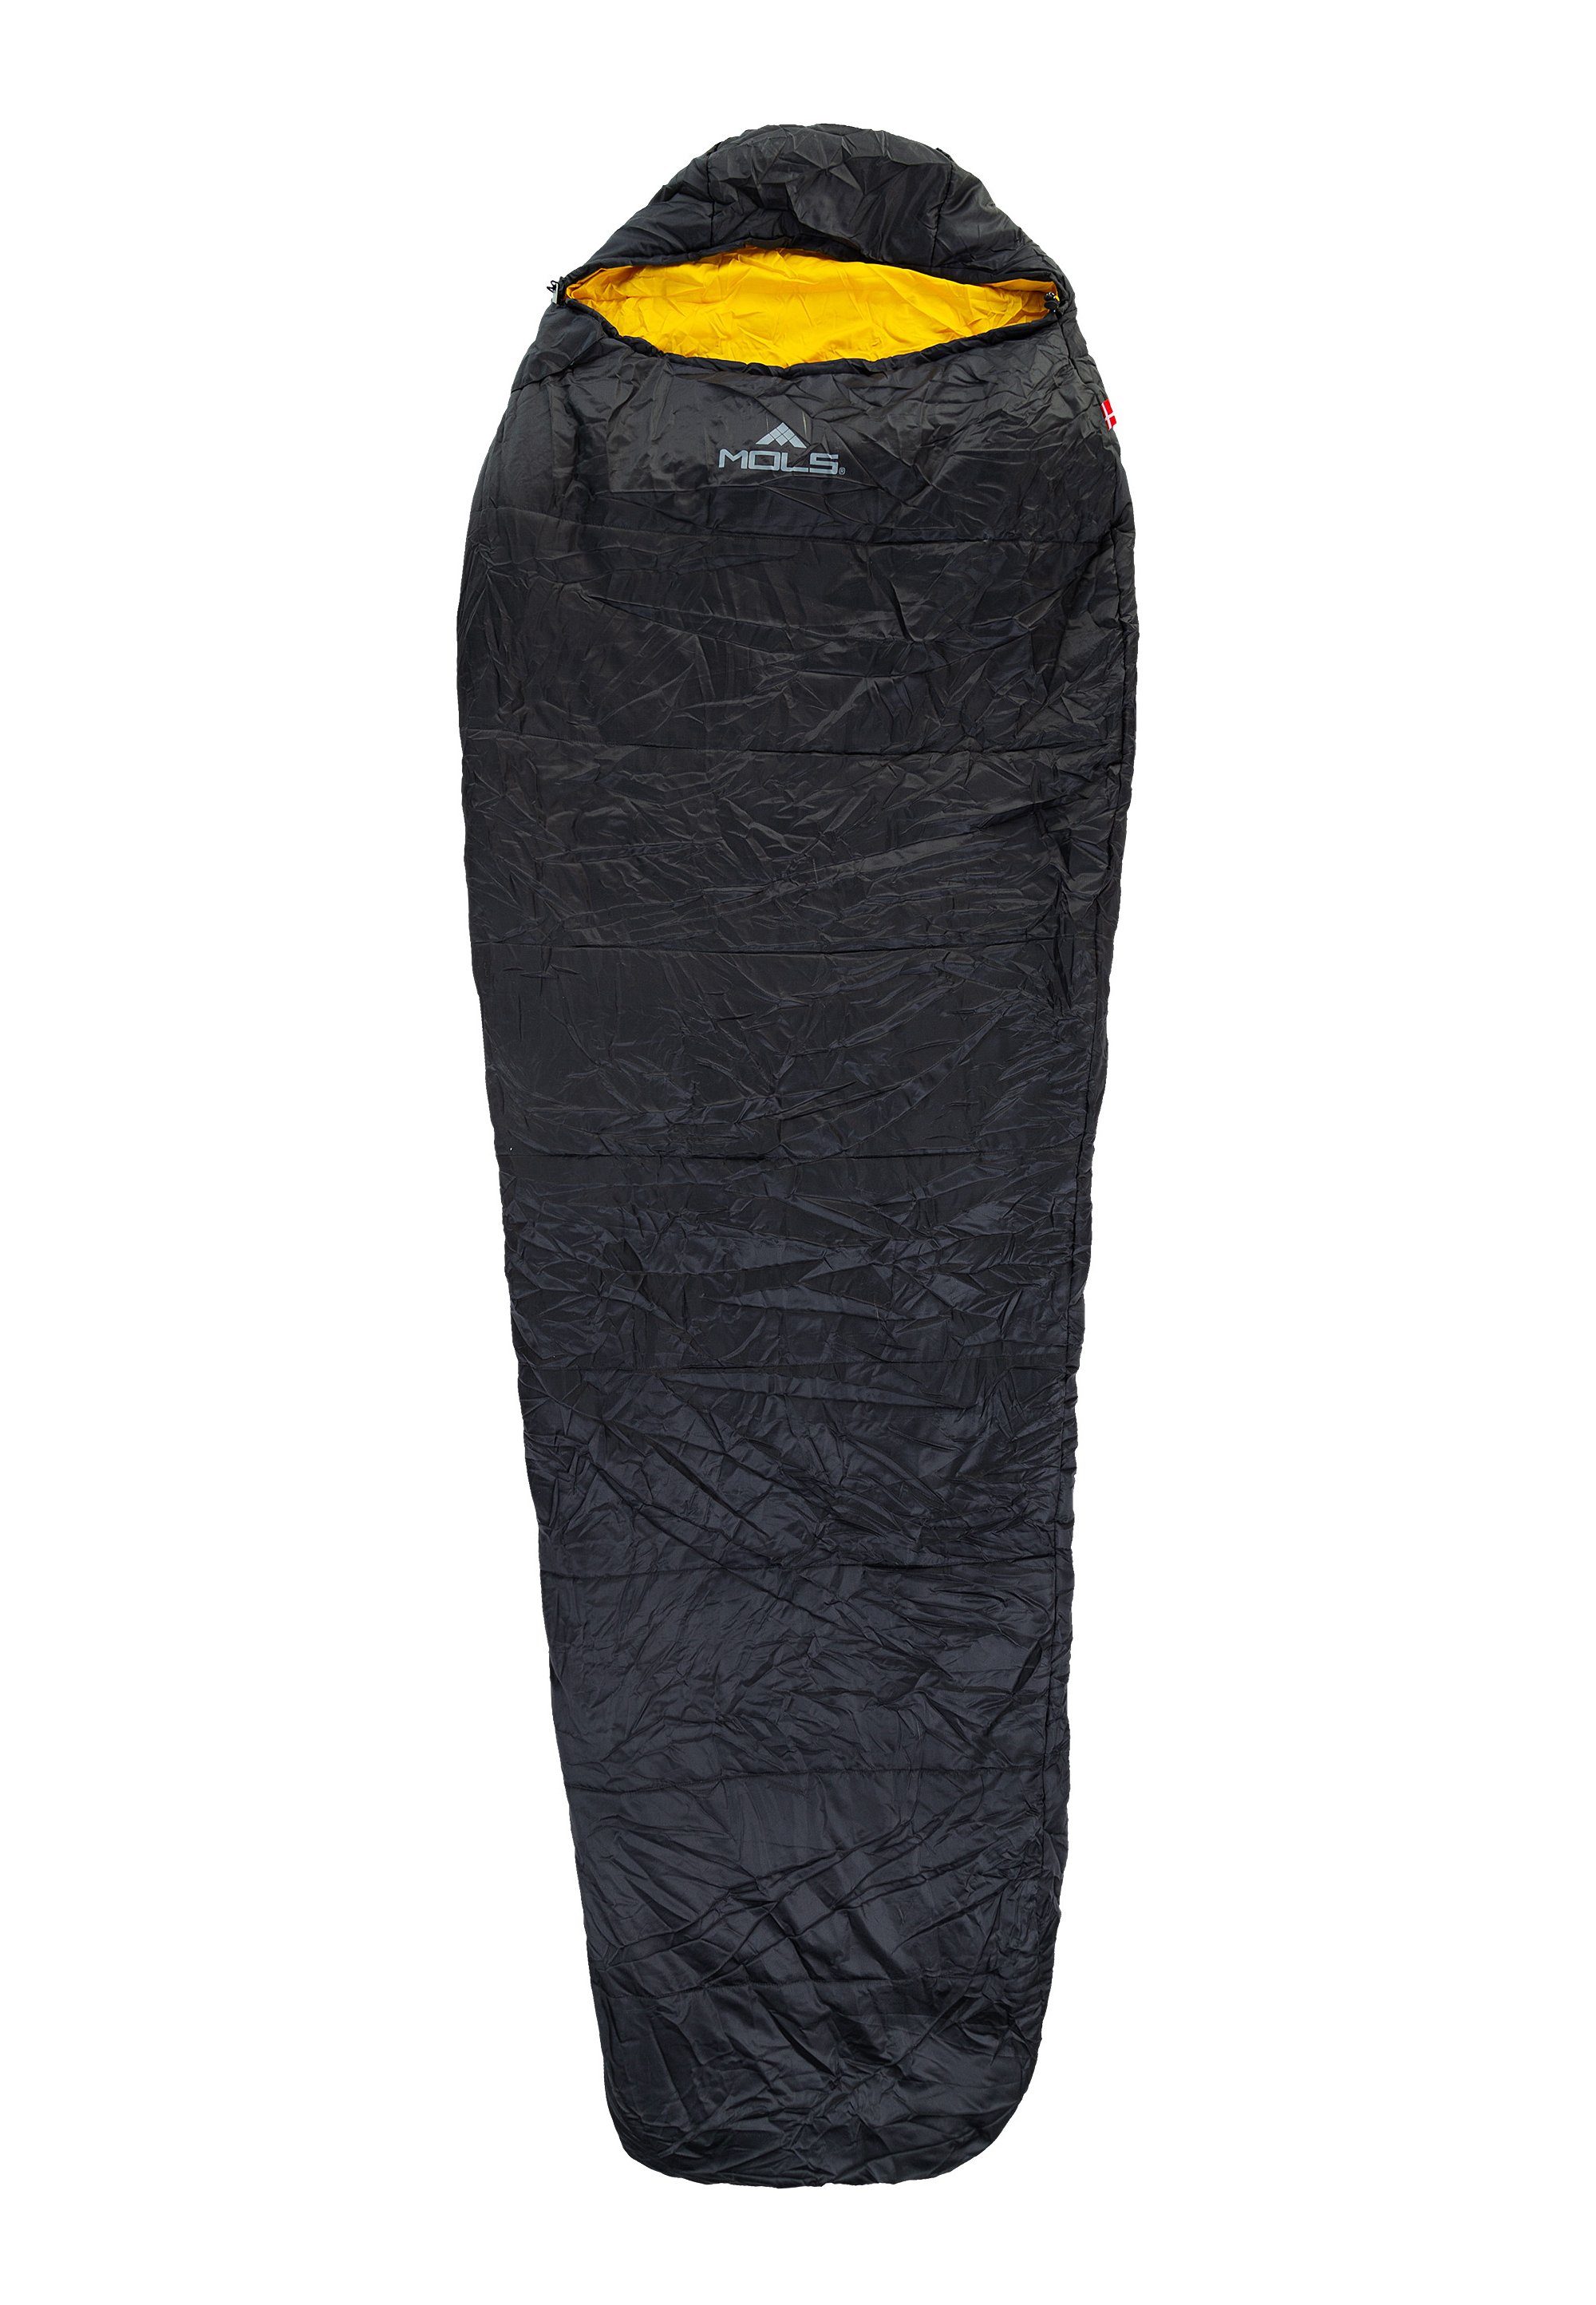 MOLS Trekkingschlafsack und atmungsaktiven Inca, Design mm leichtgewichtigen